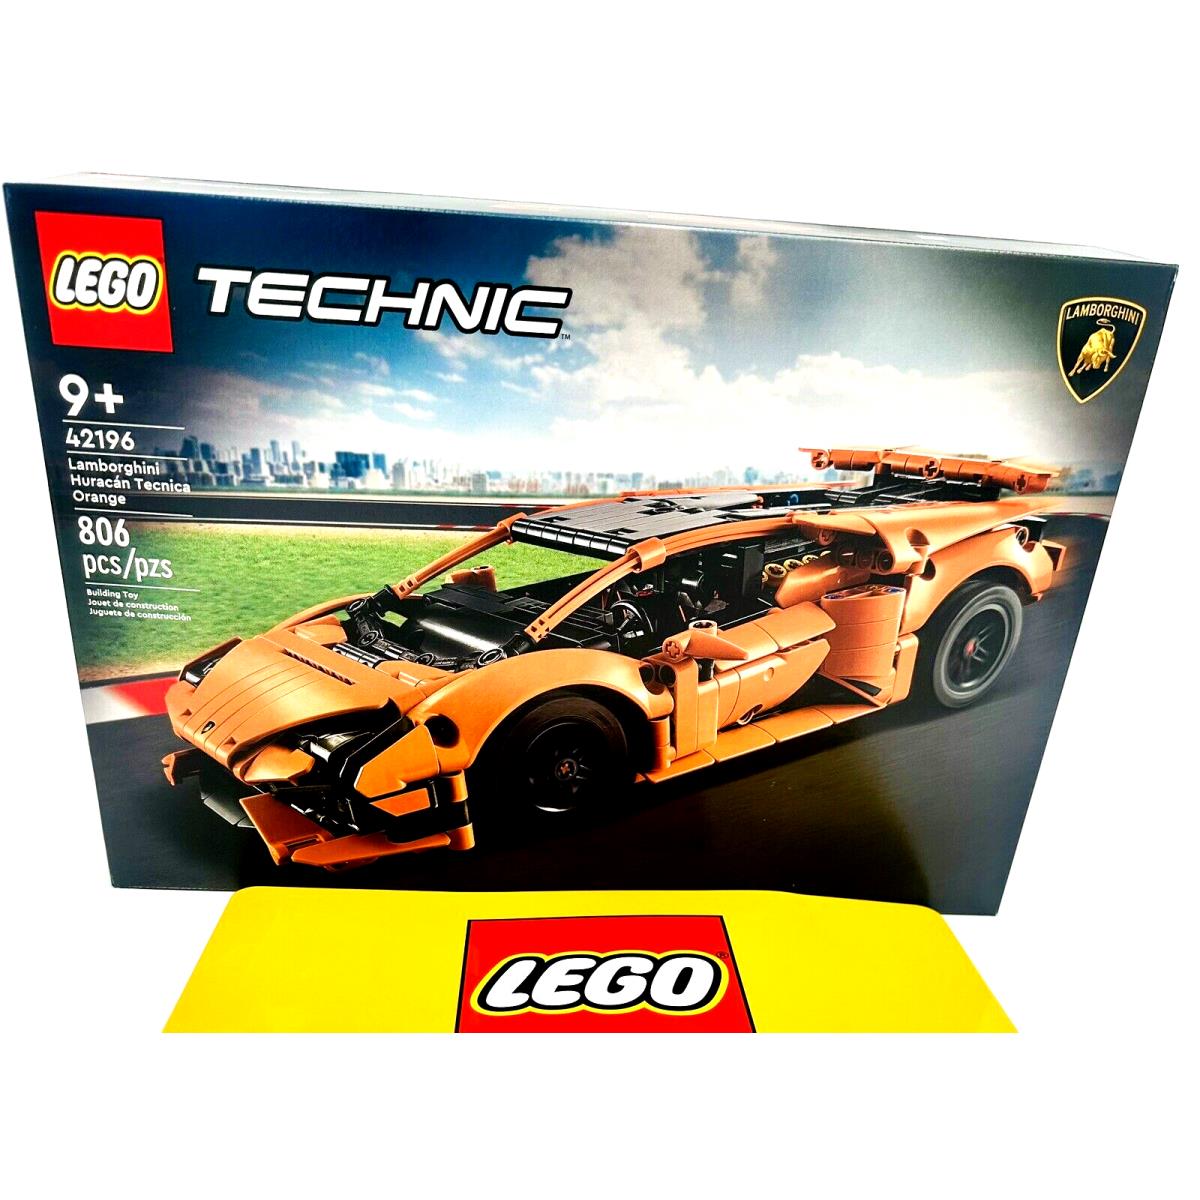 Lego Technic 42196 Lamborghini Hurac n Tecnica Orange